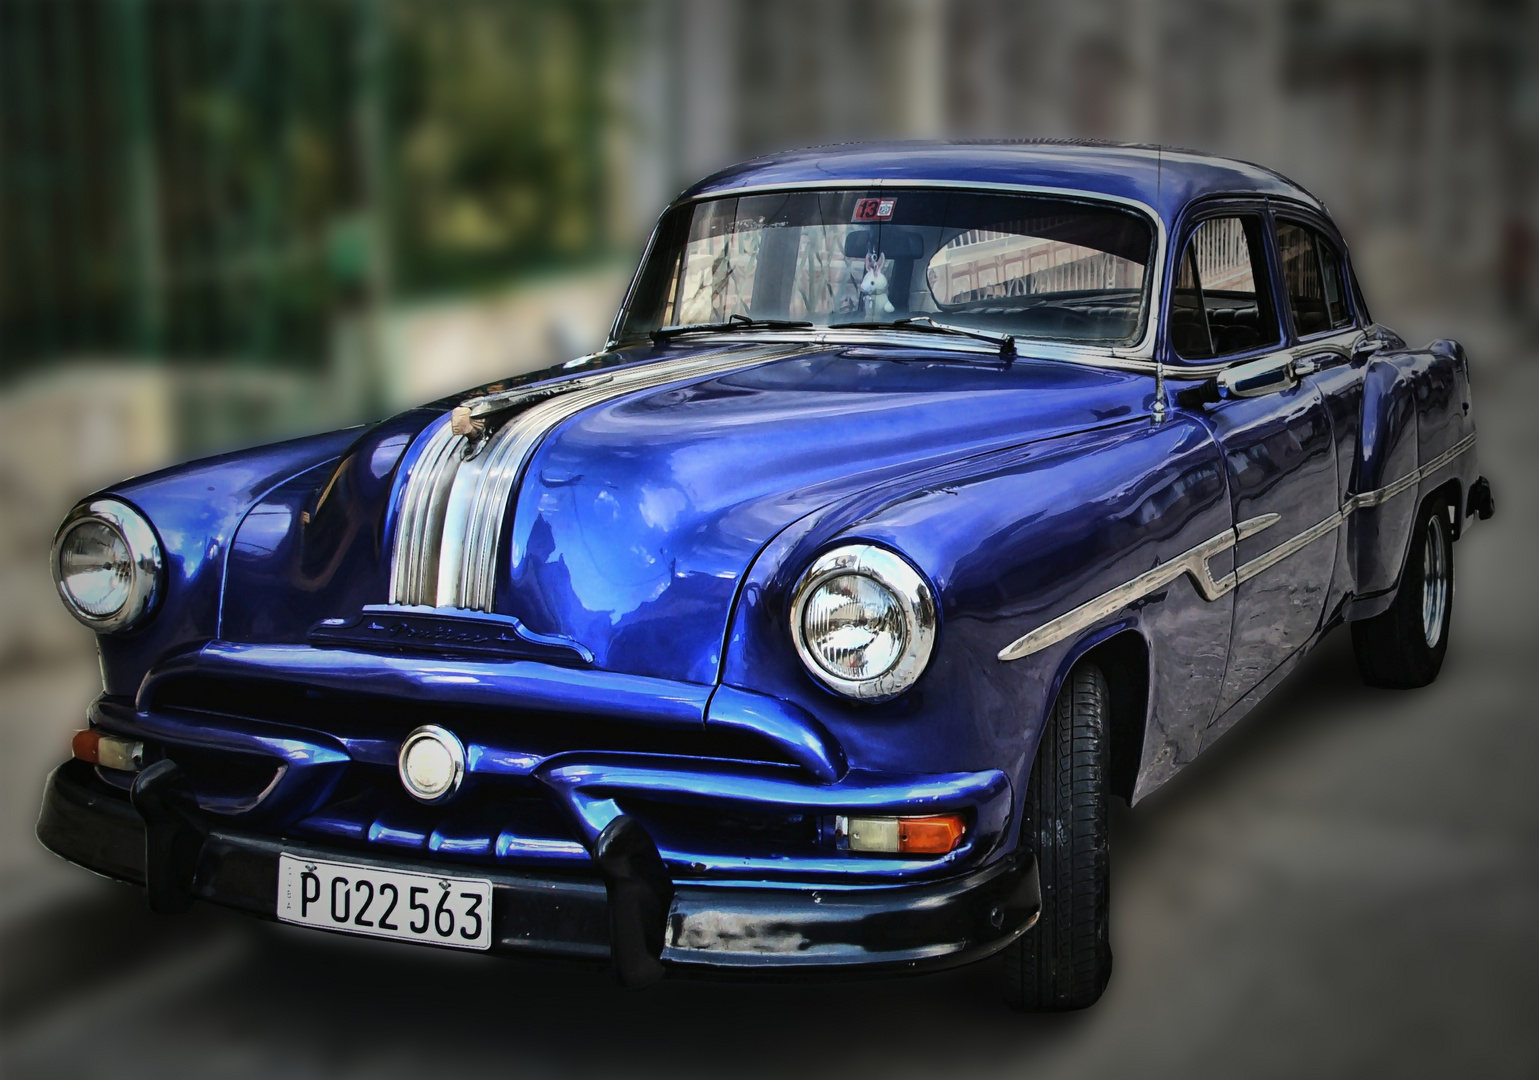 Cuban Cars: Blue Pontiac